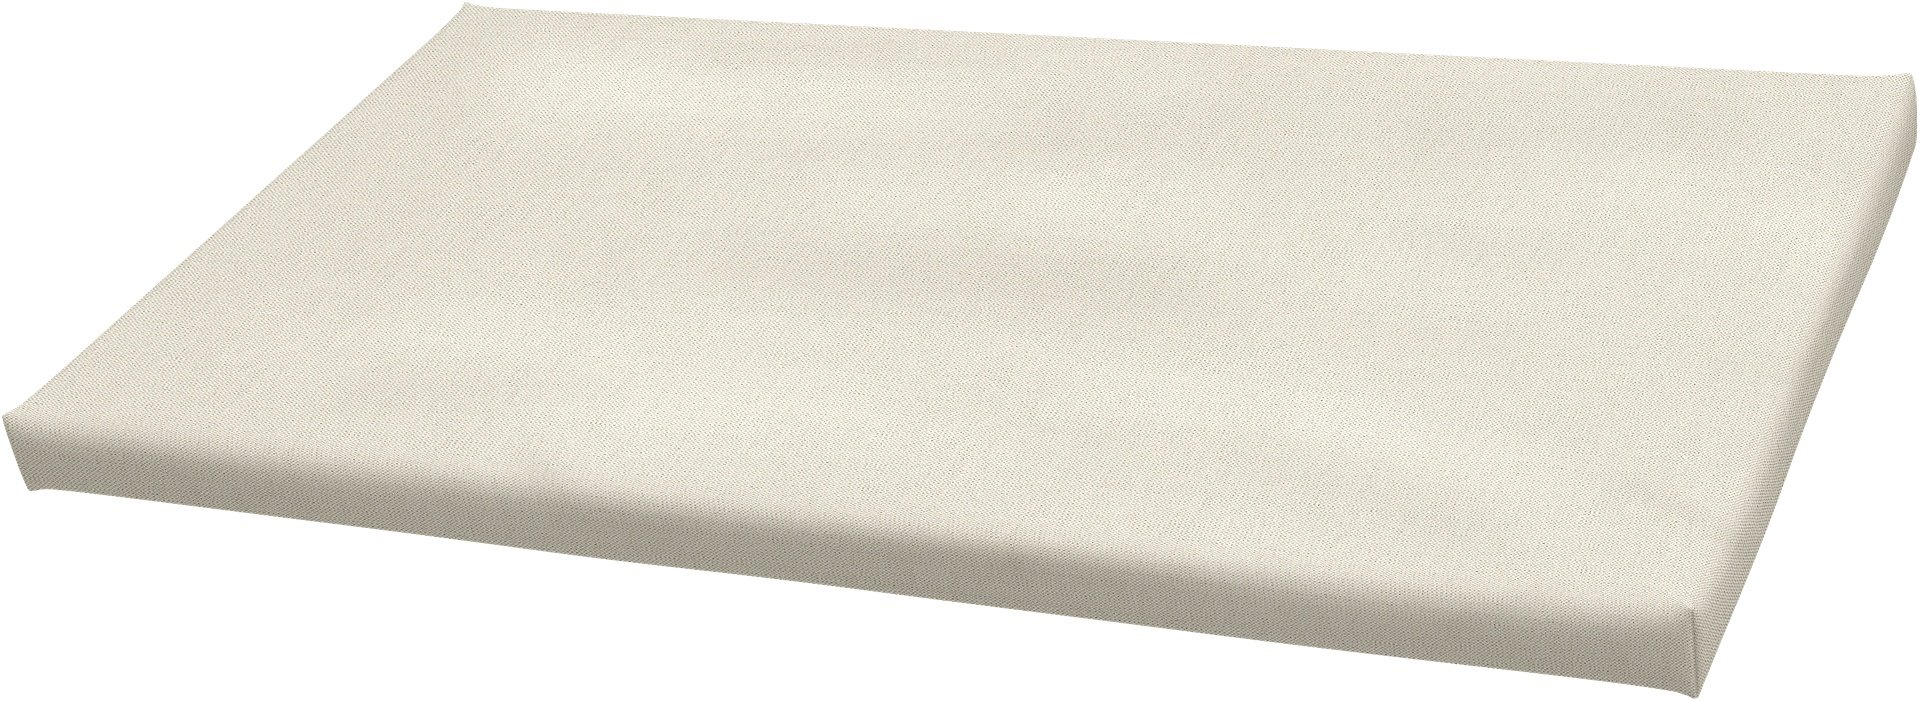 IKEA - Bankkamrat Cushion Cover 90x50x3,5 cm , Unbleached, Linen - Bemz